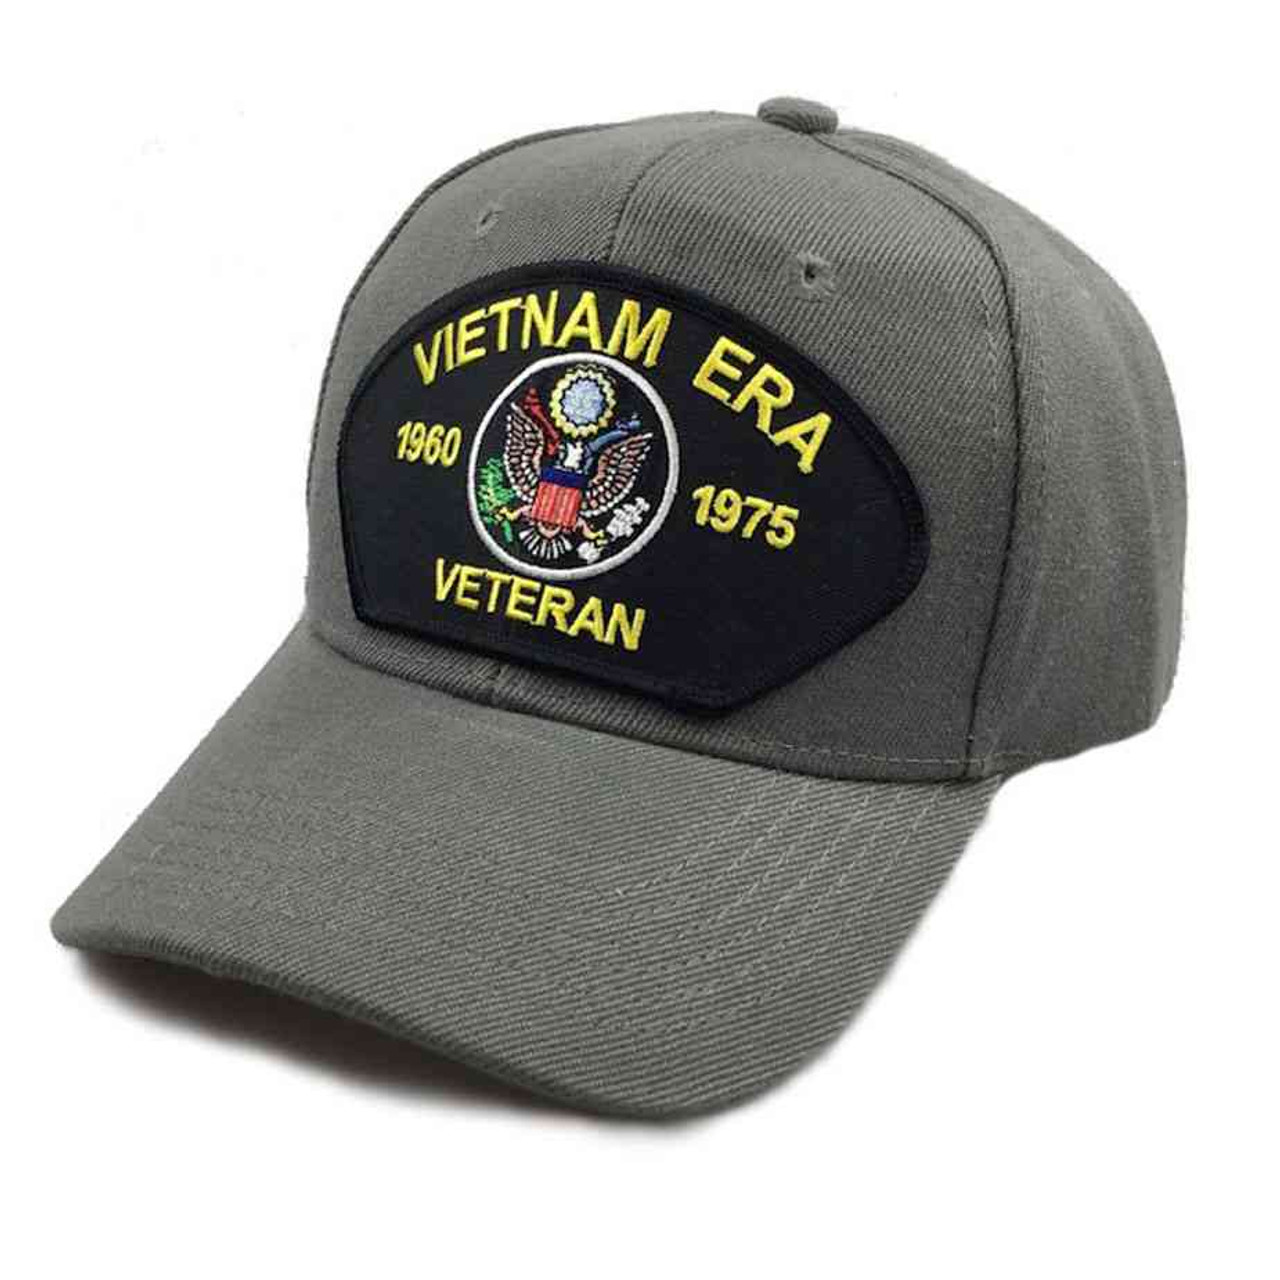 vietnam era veteran hat special edition 19601975